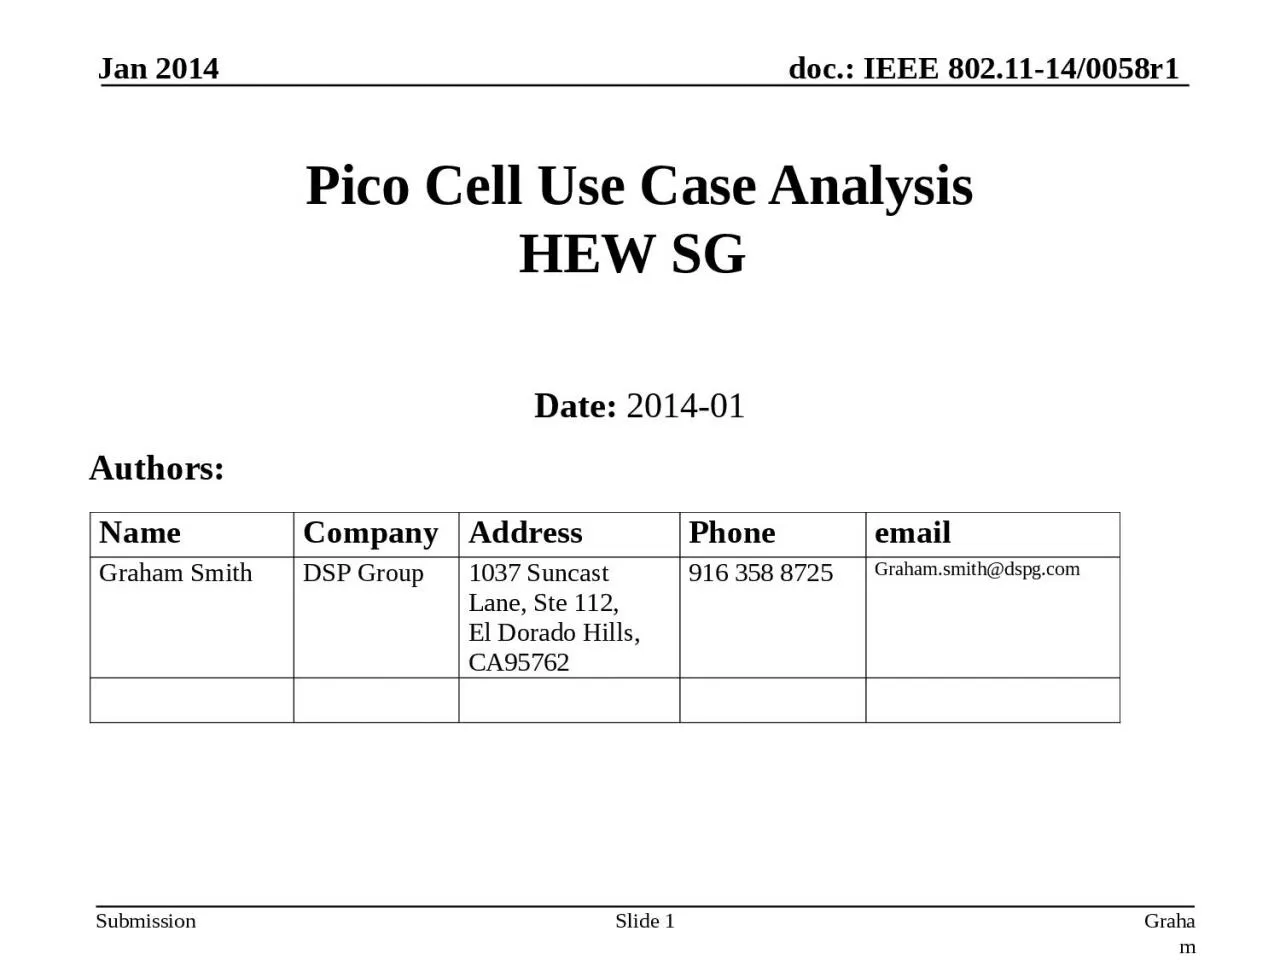 Jan 2014 Pico Cell Use Case Analysis